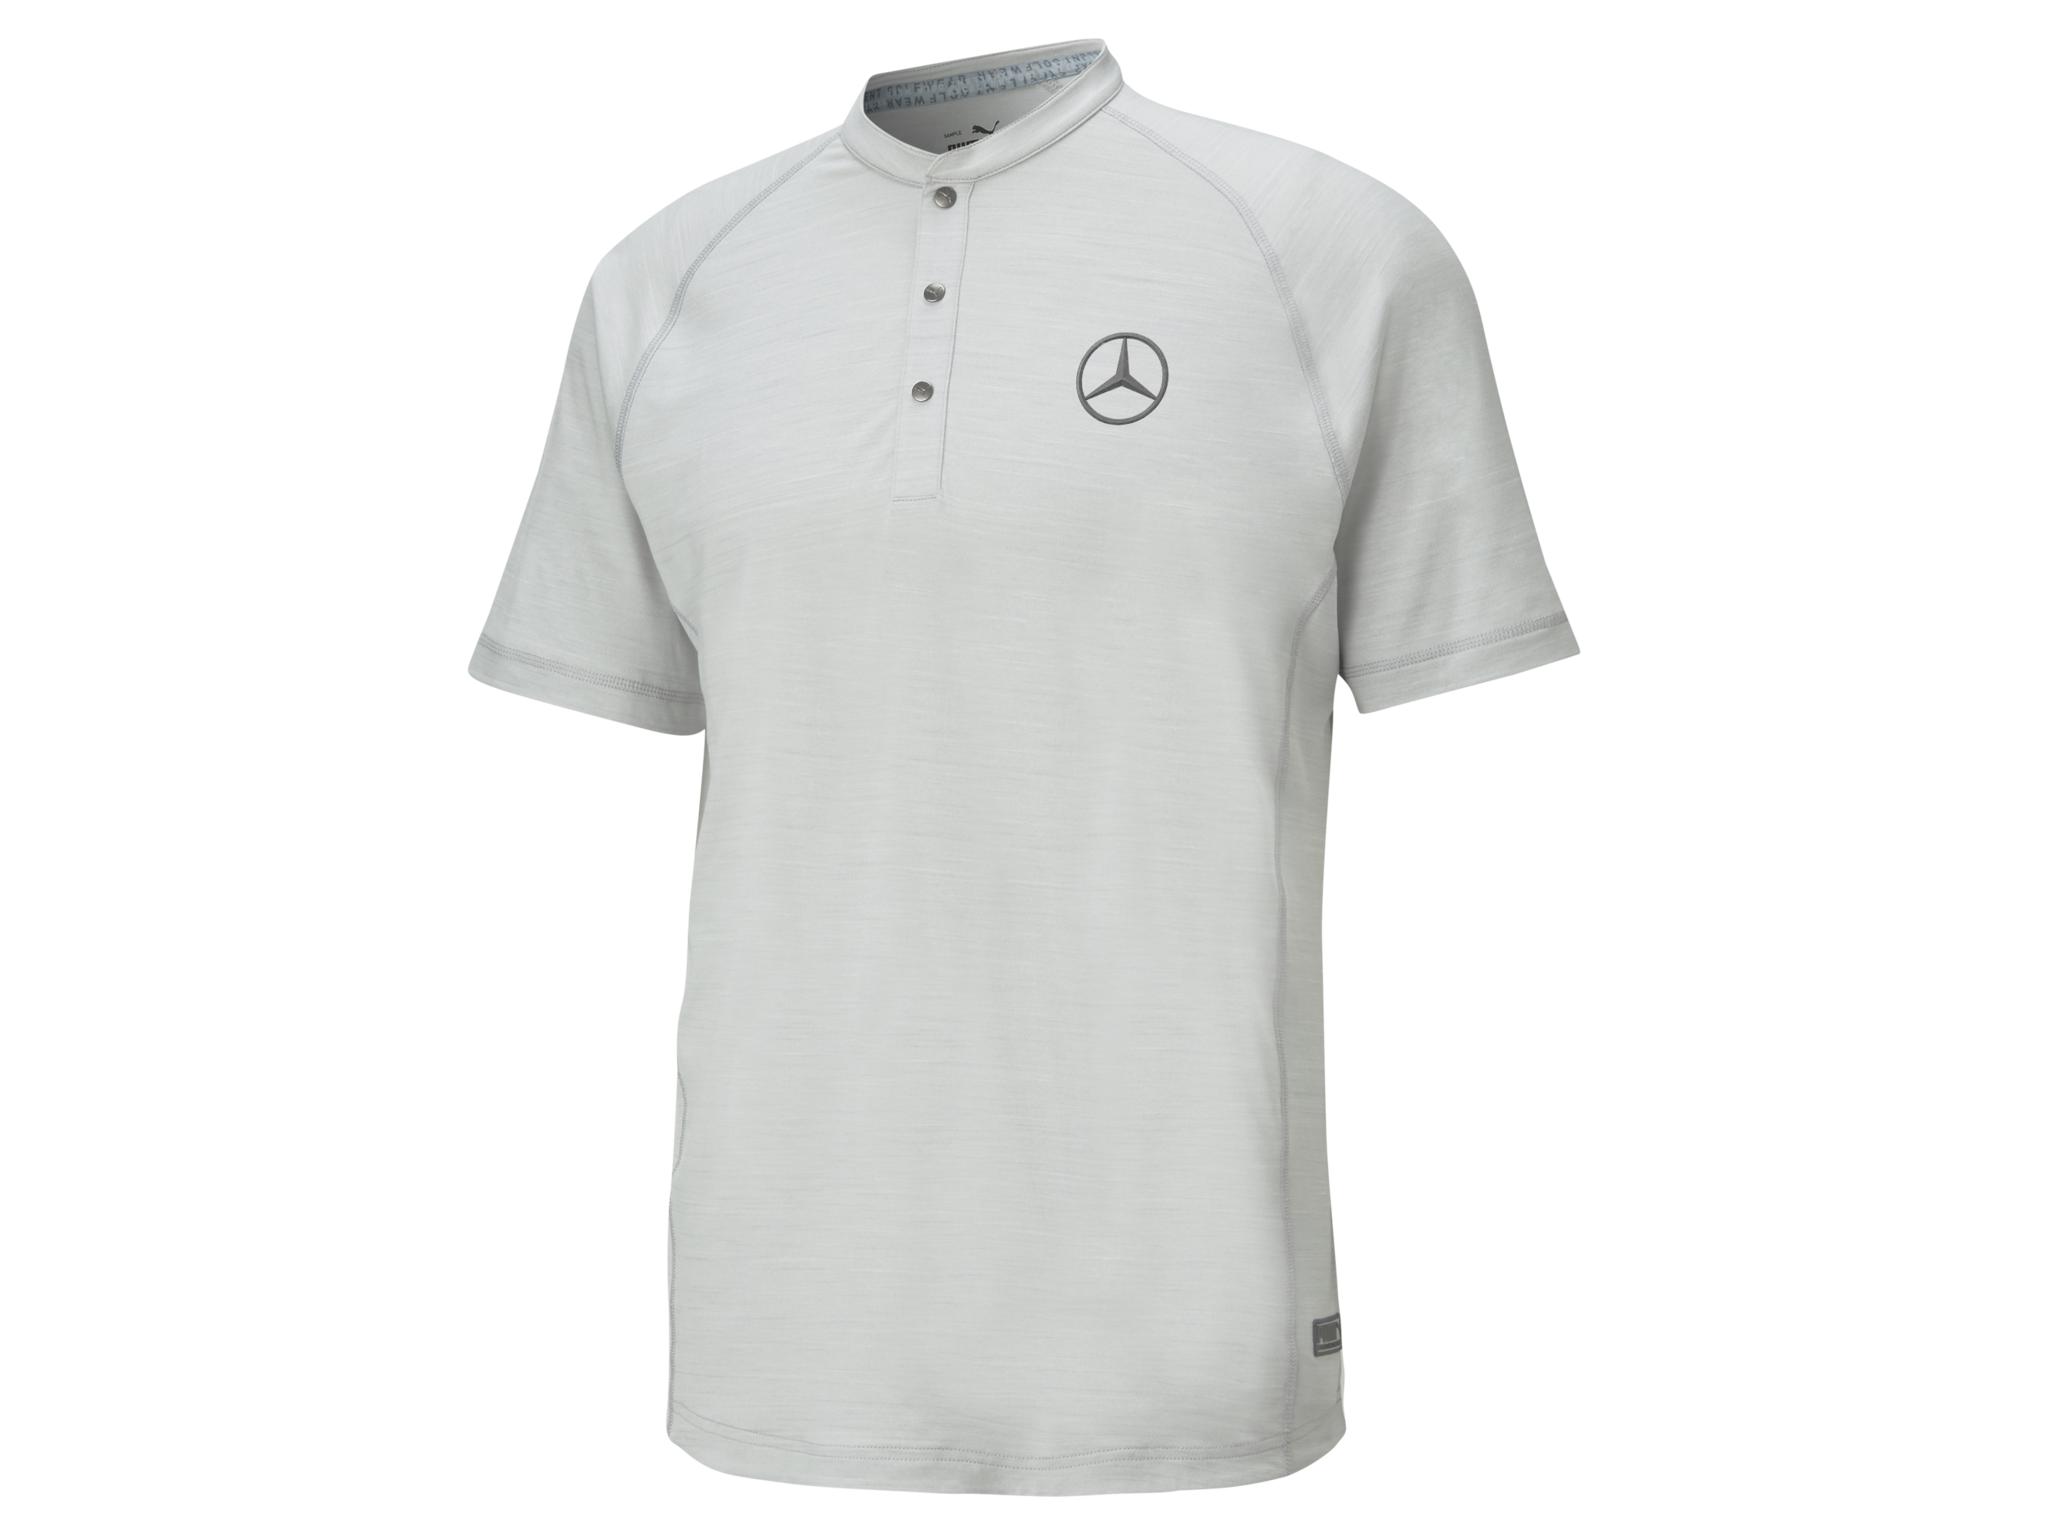 Golf-Poloshirt Herren - XXL, grau